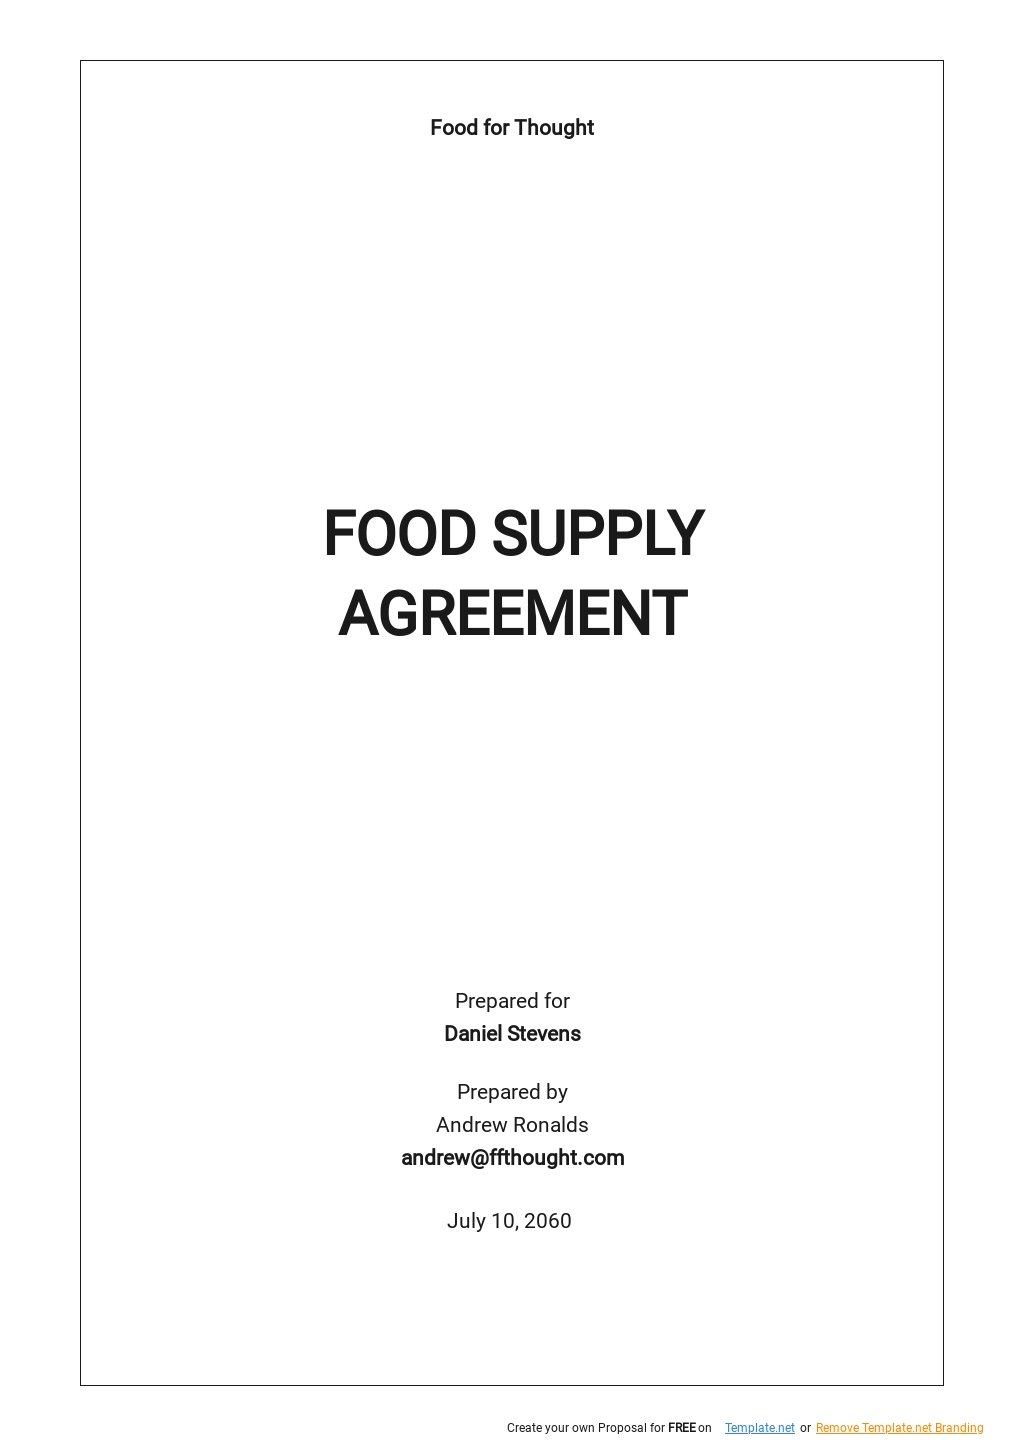 Food Supply Agreement Template .jpe